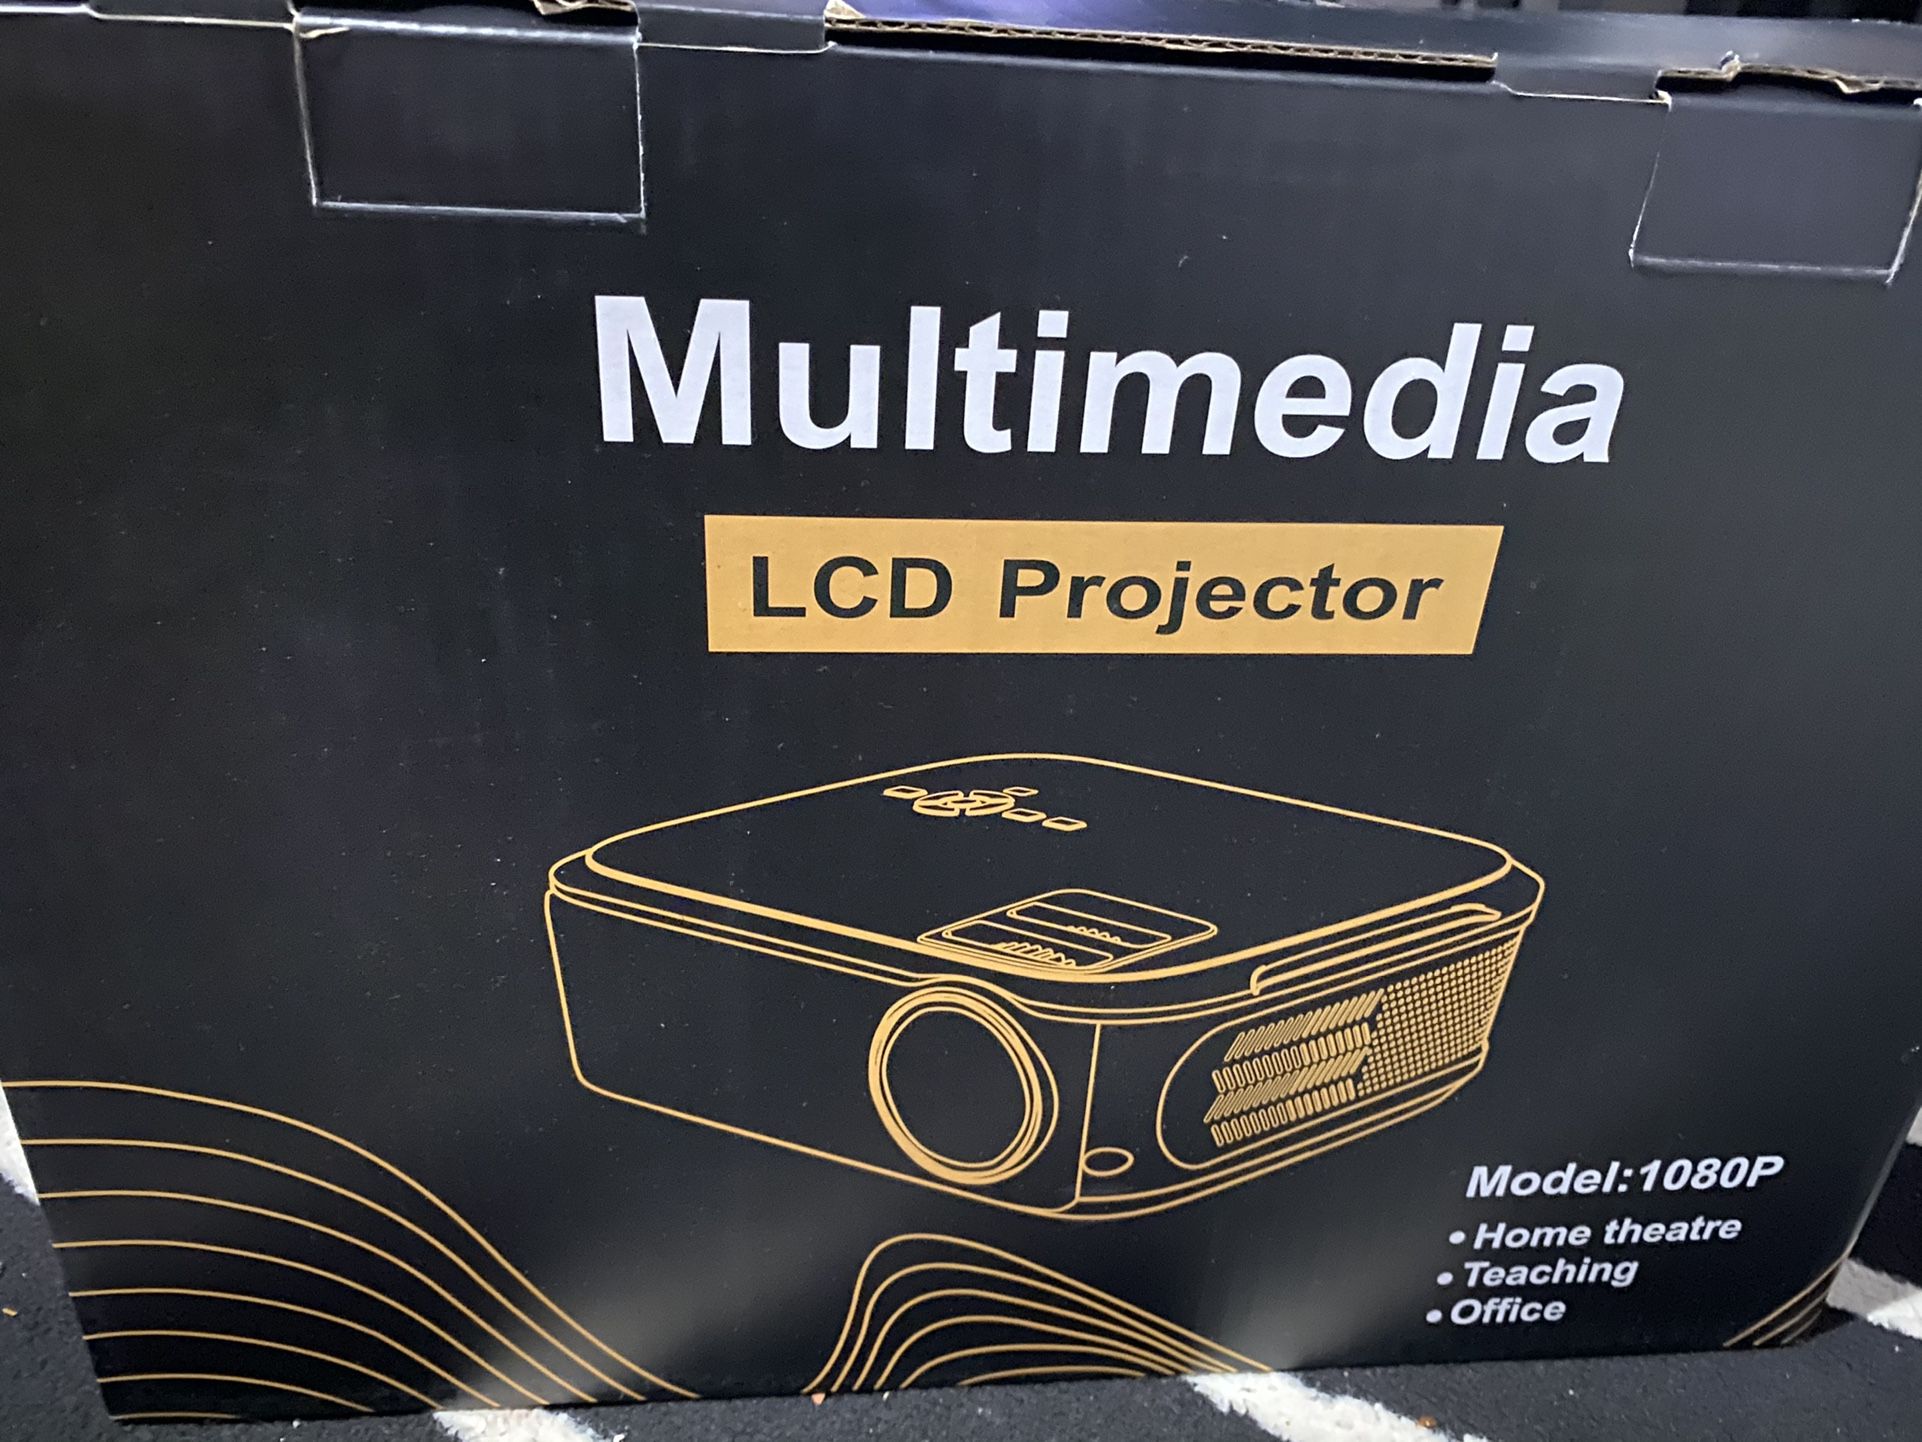 Multimedia Full Hd Projector New With Warranty